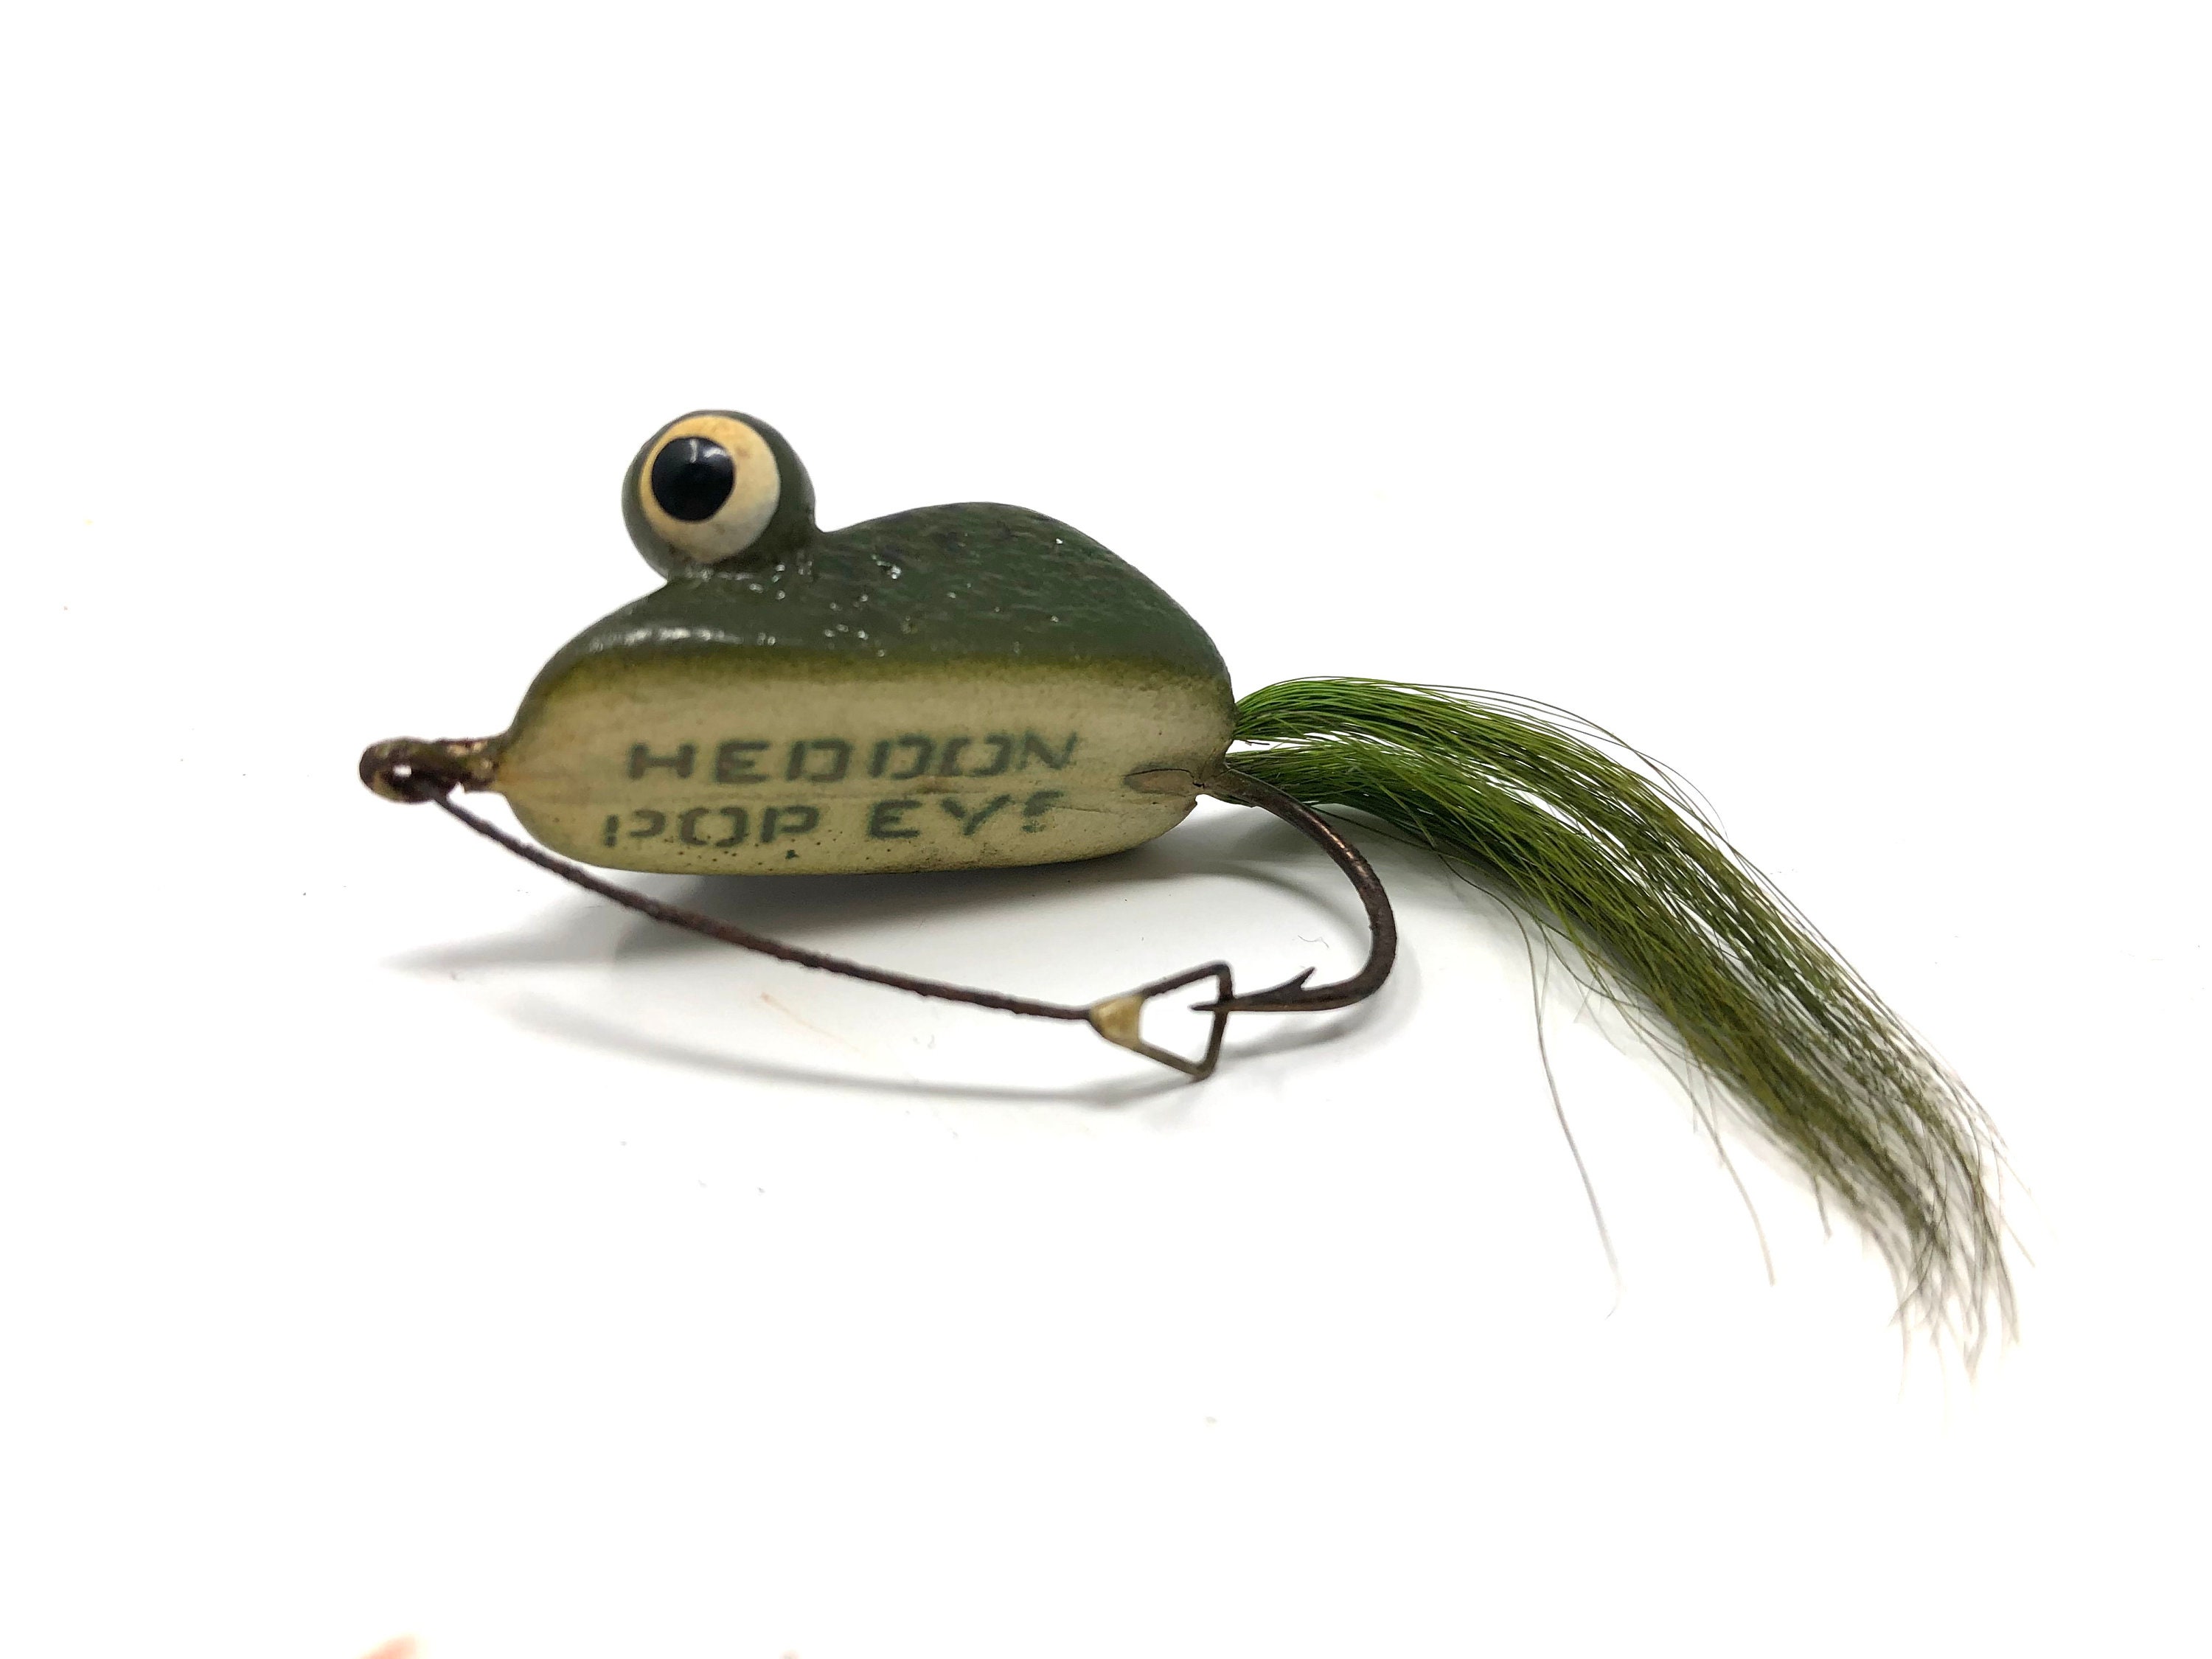 Vintage Heddon Pop Eye Frog Minty Fly Rod Lure / Antique Fly Rod